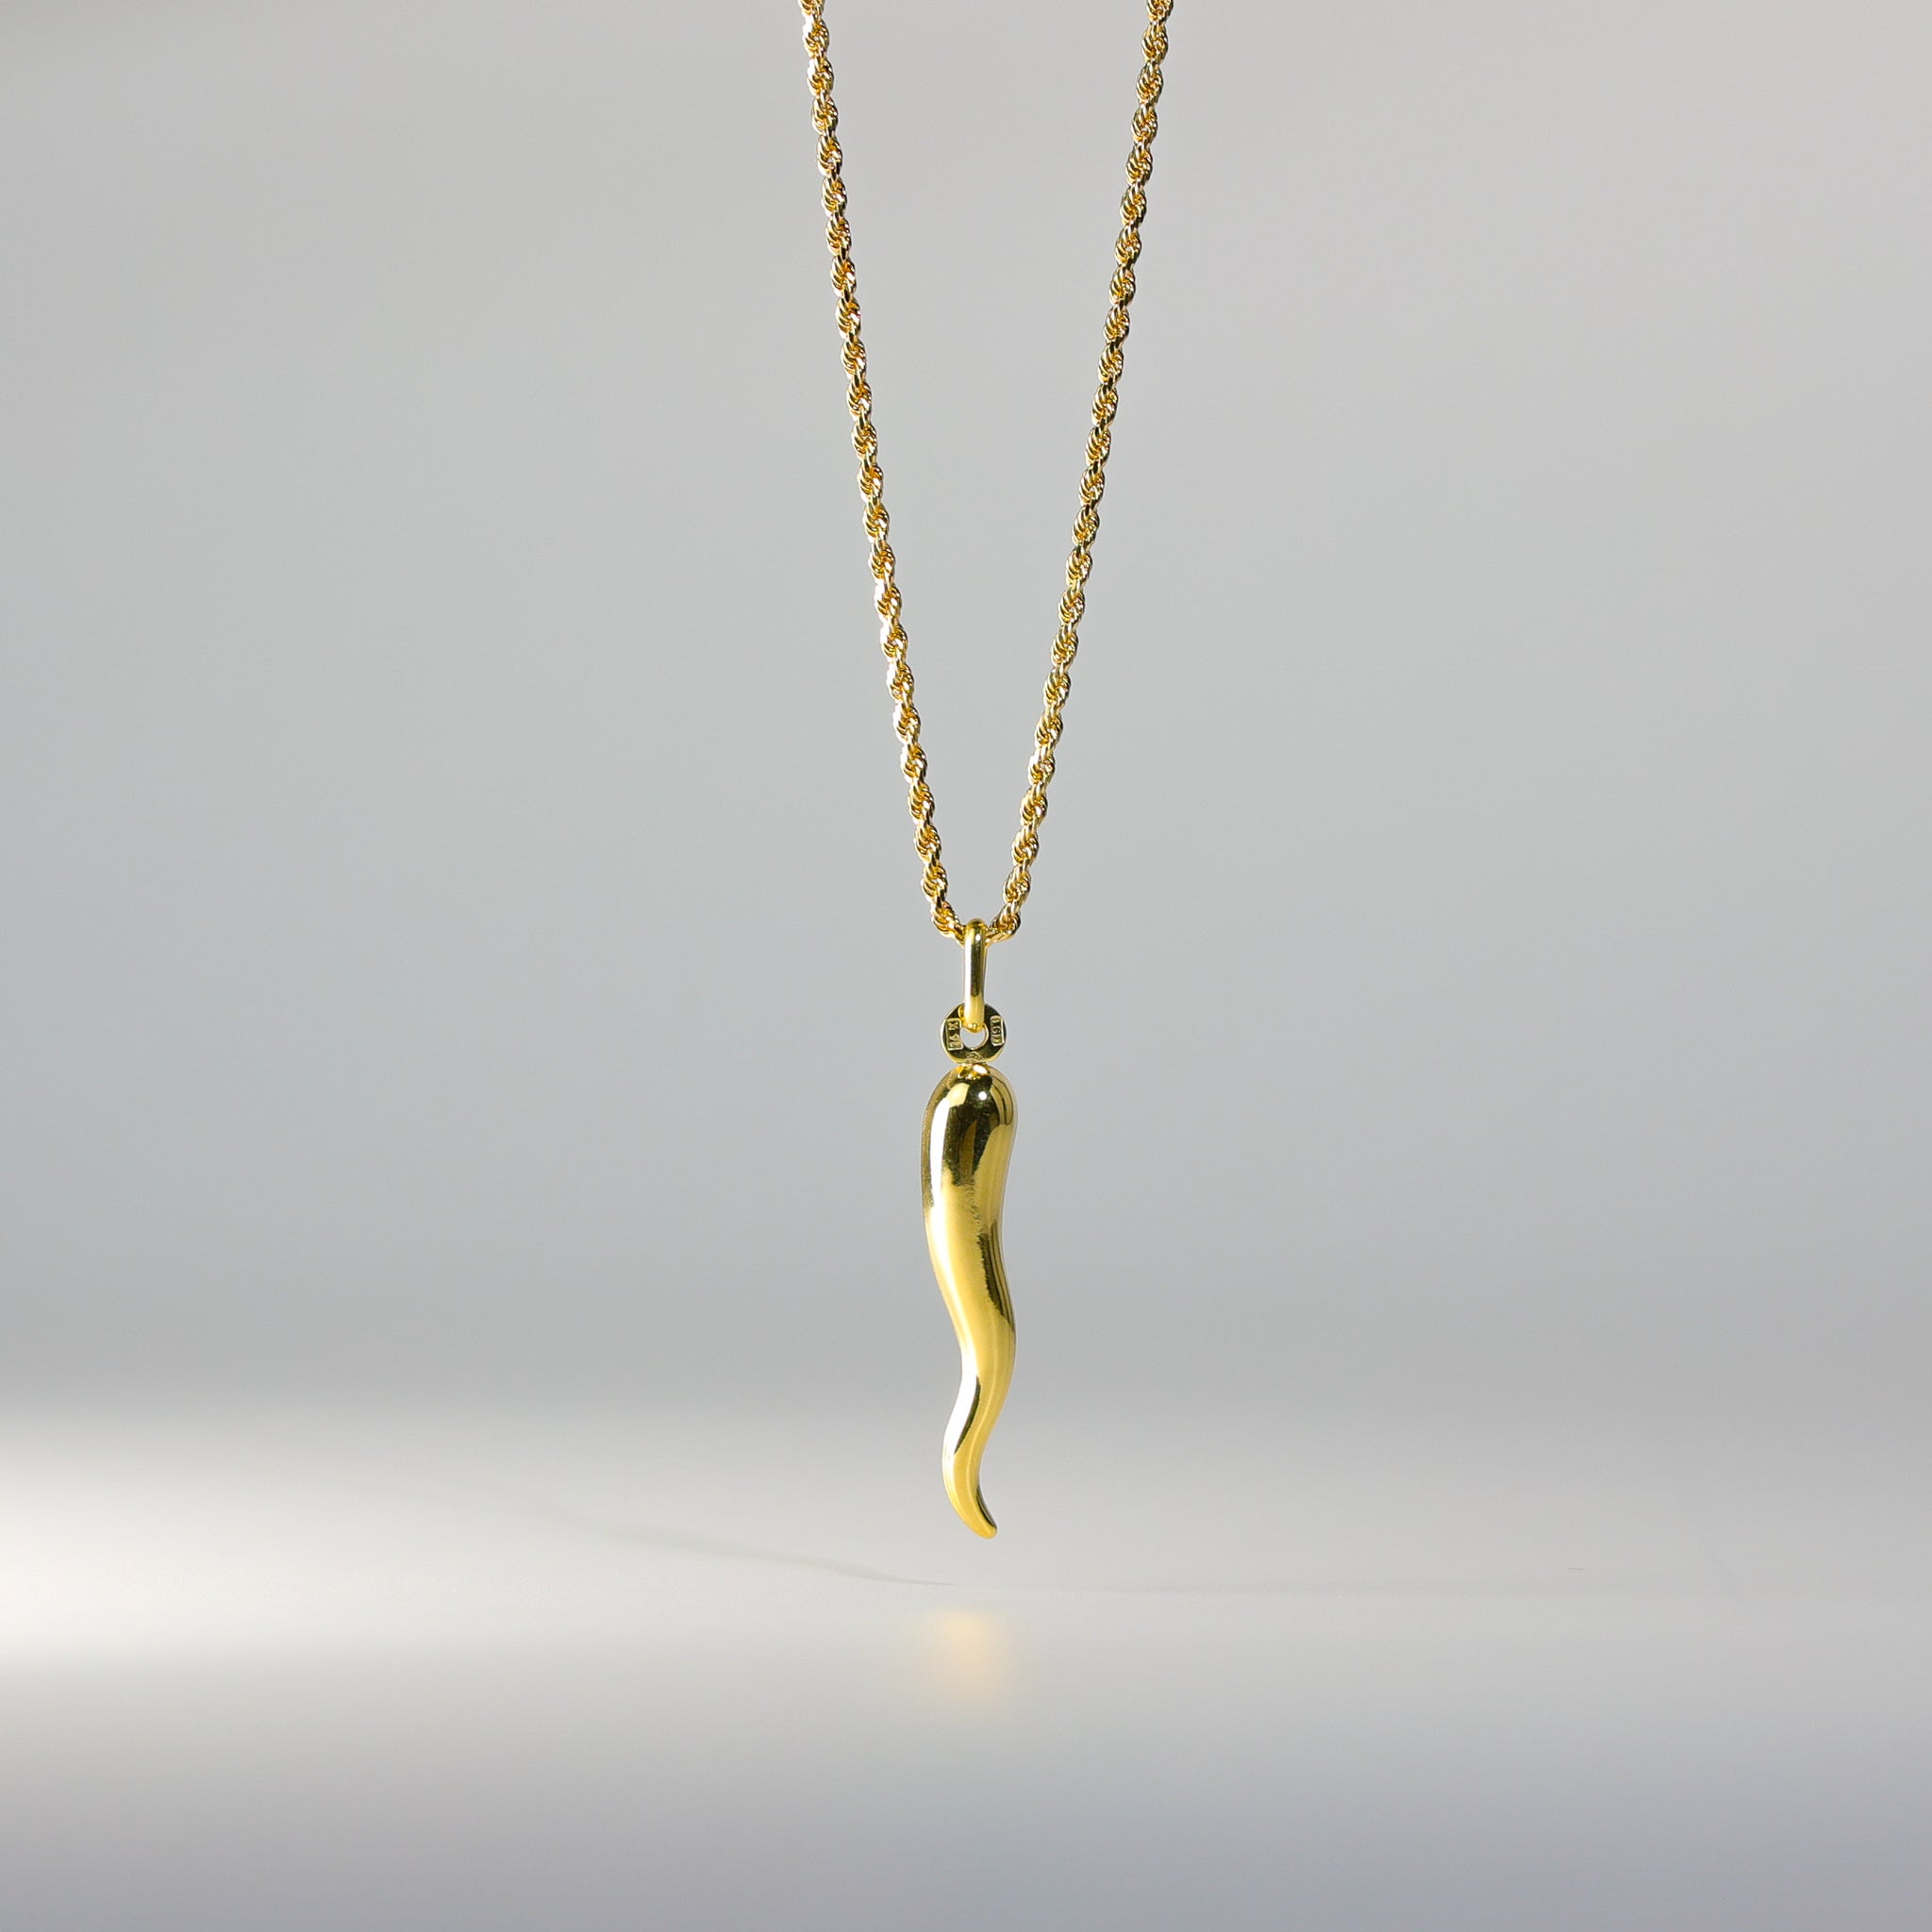 Cornicello Italian Horn Gold Horn Pendant For Women Chili Pepper Stainless  Steel Jewelry From Fashiontopp, $8.78 | DHgate.Com